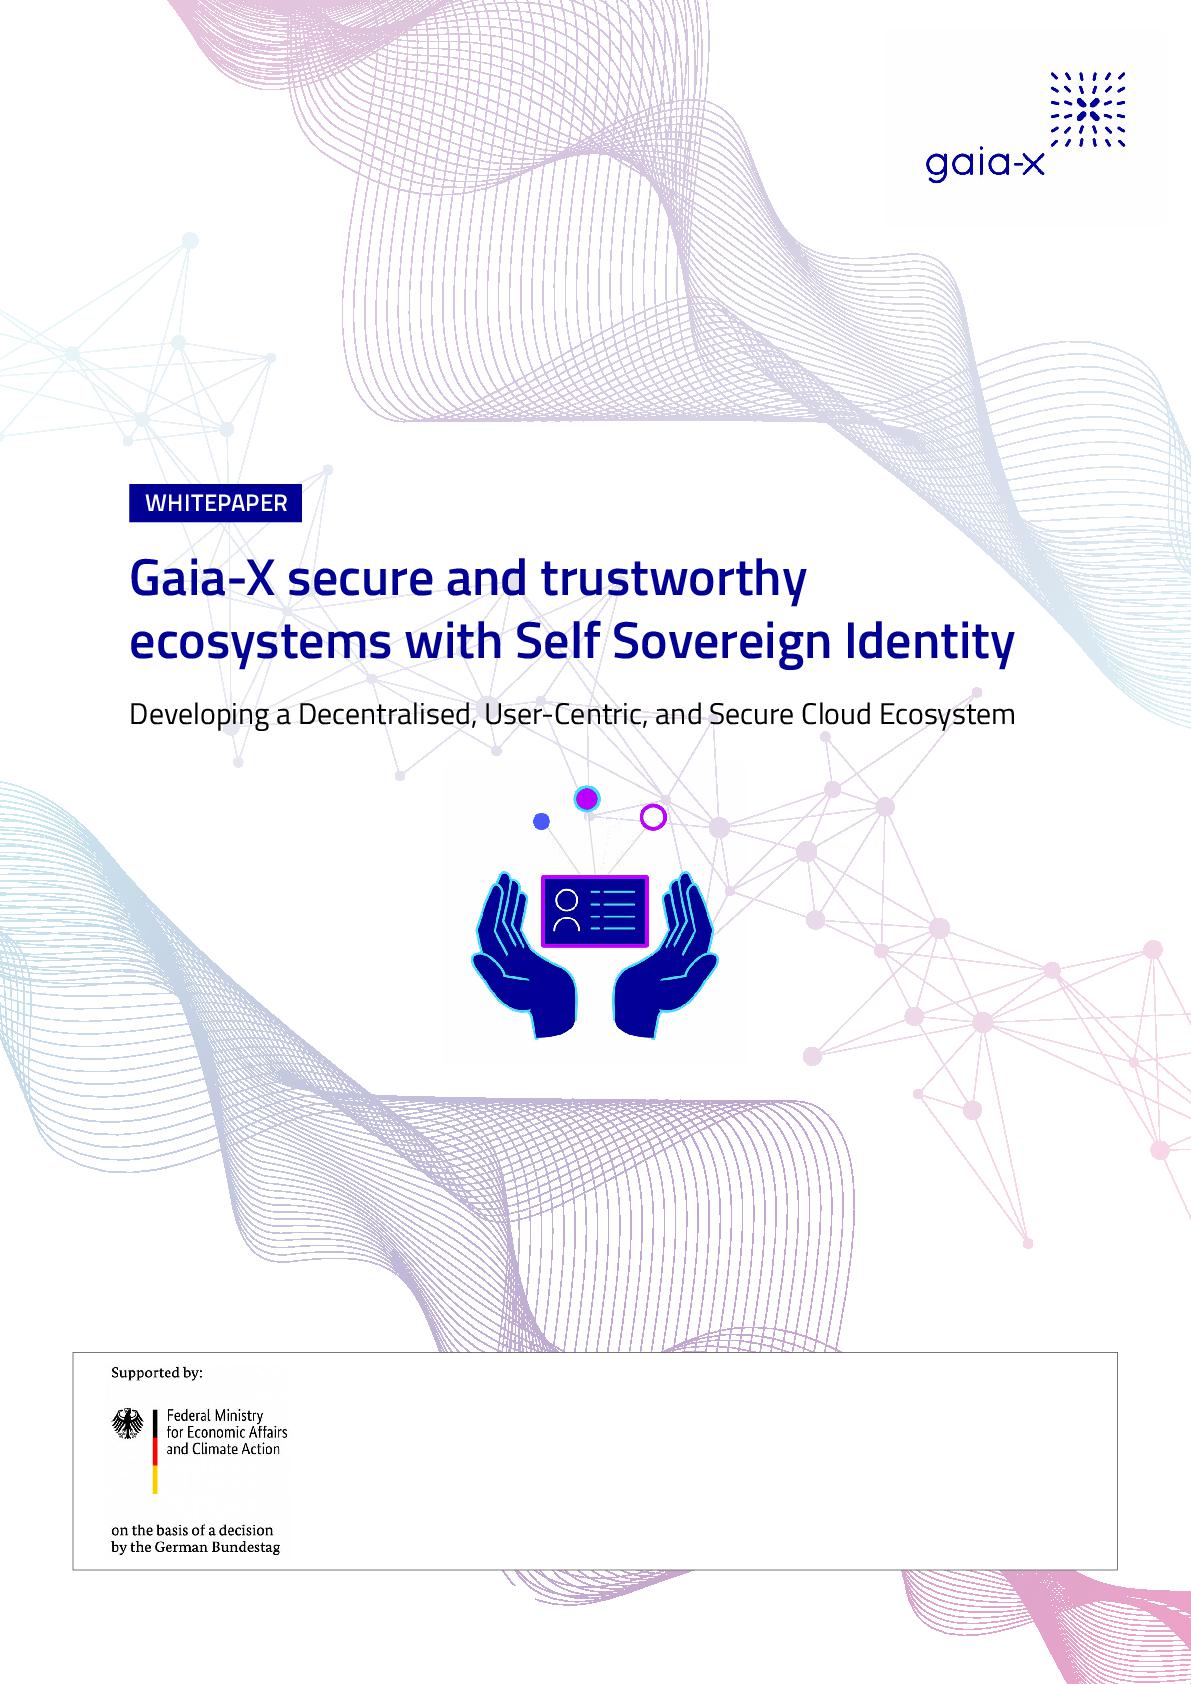 Self Sovereign Identity - SSI